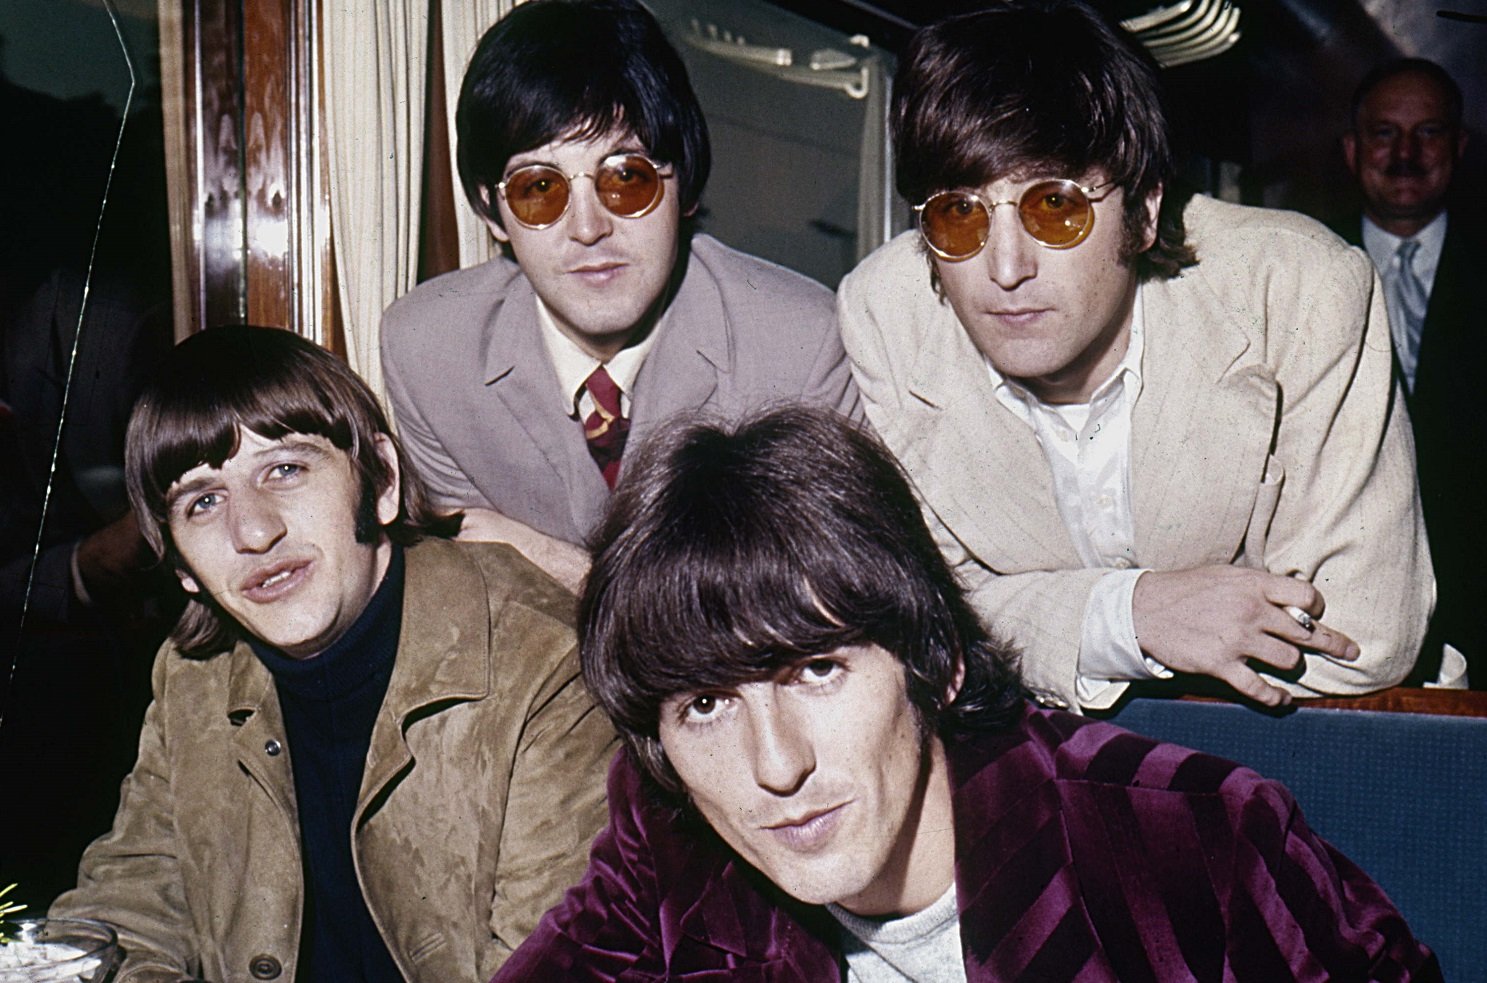 Beatles pose in 1966